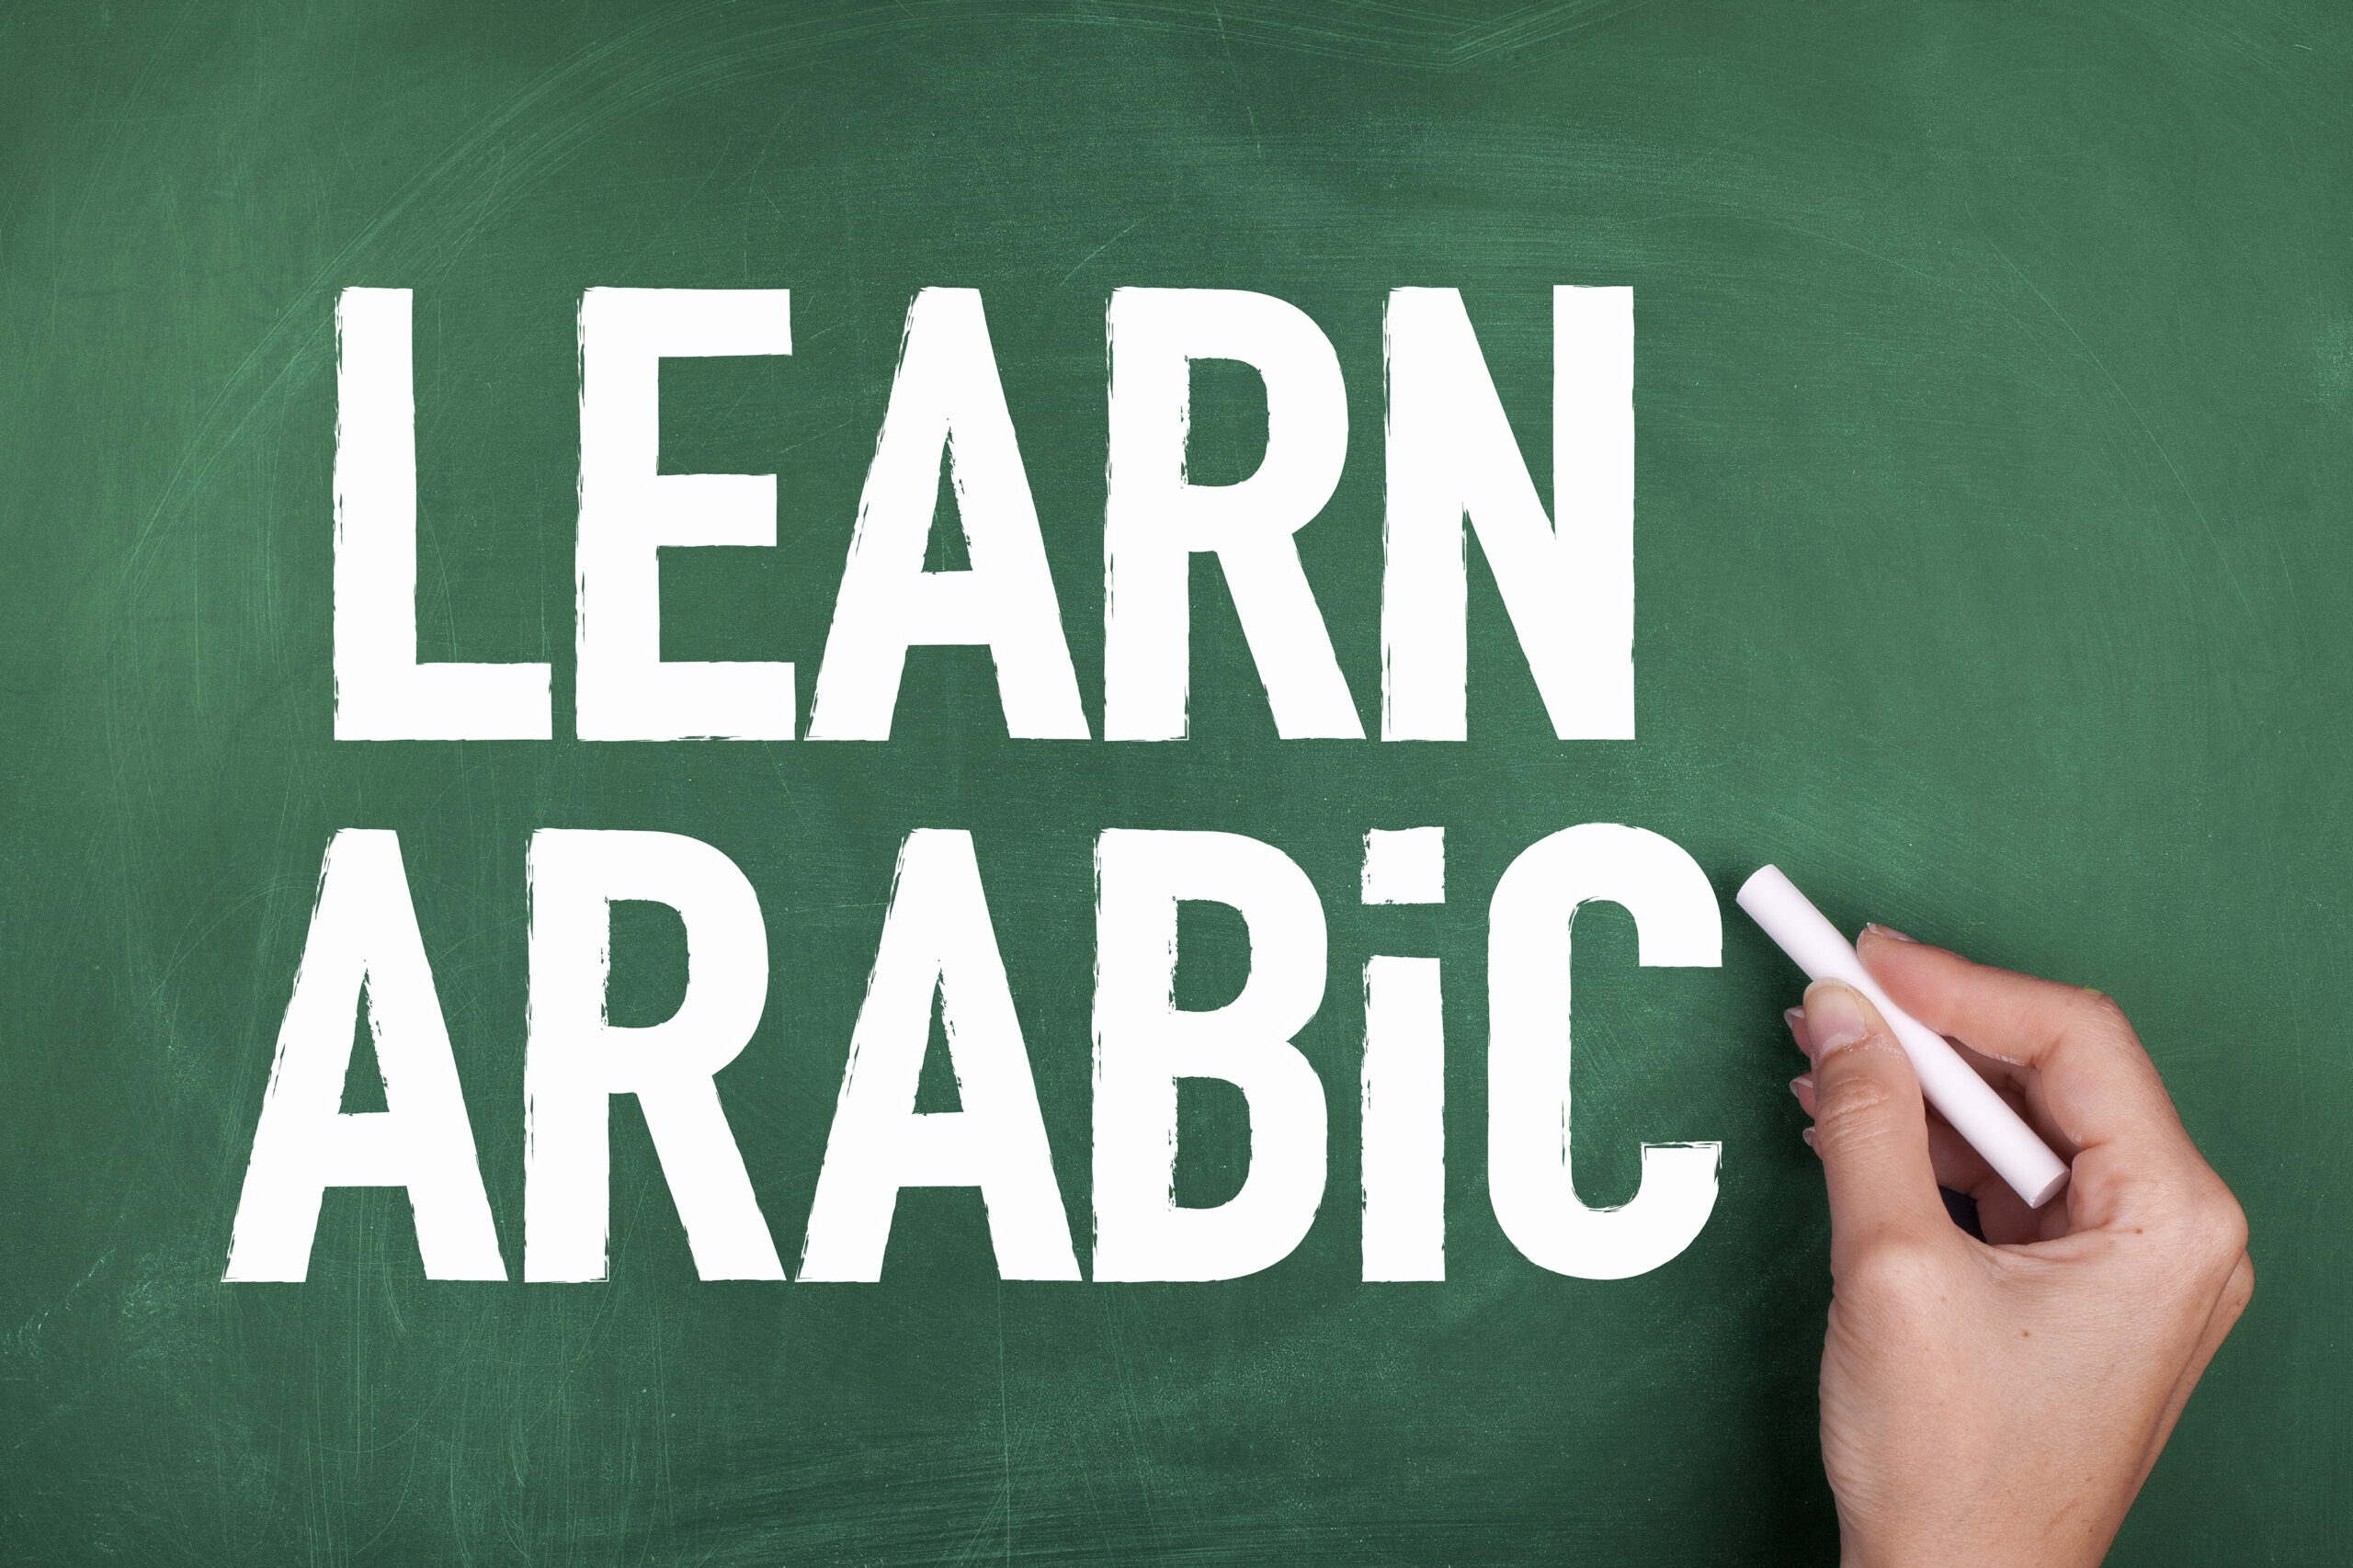 The best Arabic grammar course online for beginners